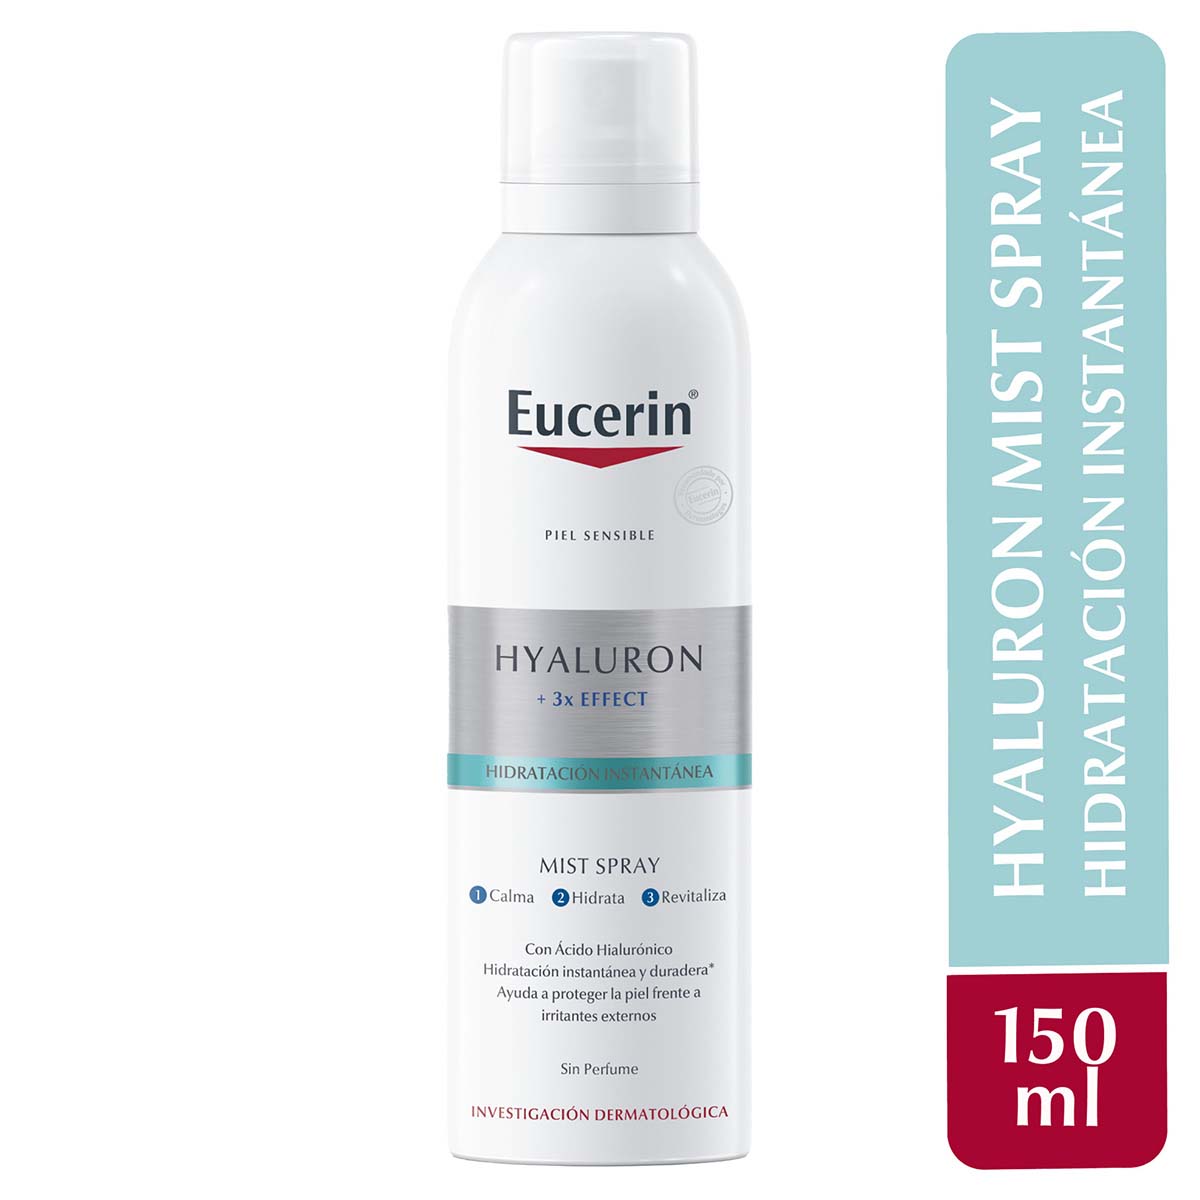 Eucerin hyaluron mist spray facial antiarrugas 150ml.